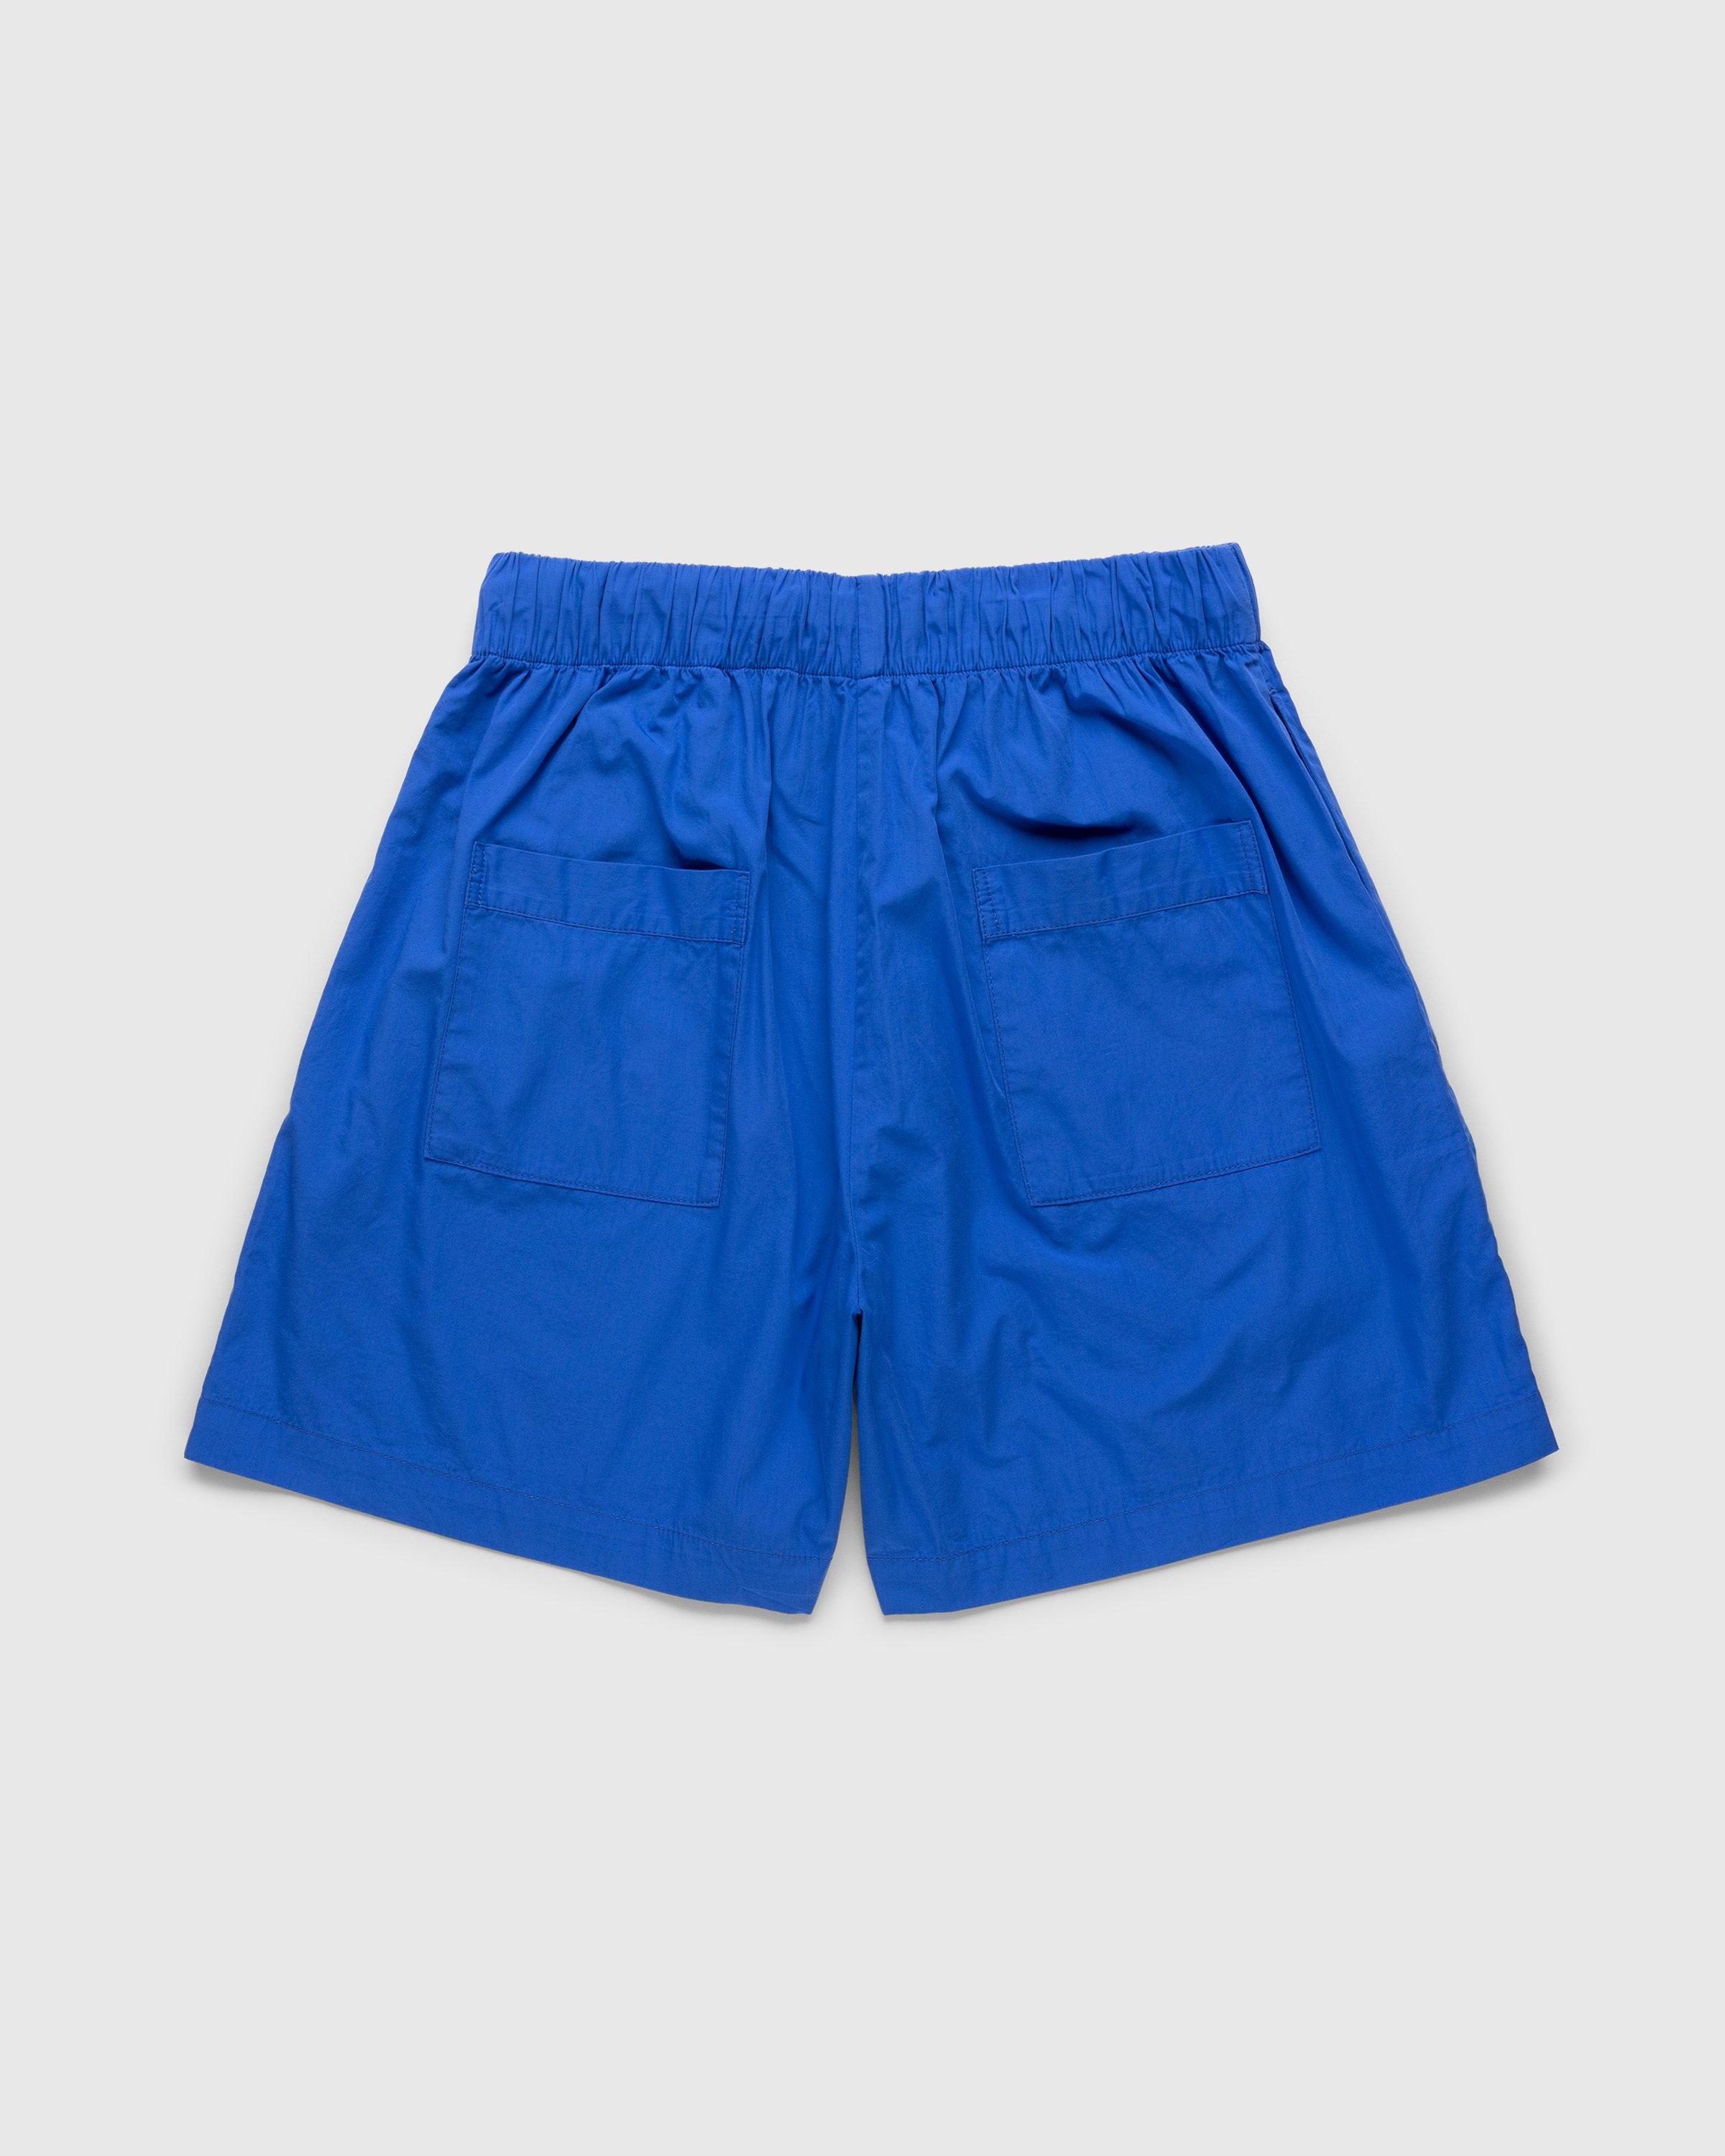 Tekla - Cotton Poplin Pyjamas Shorts Royal Blue - Clothing - Blue - Image 2